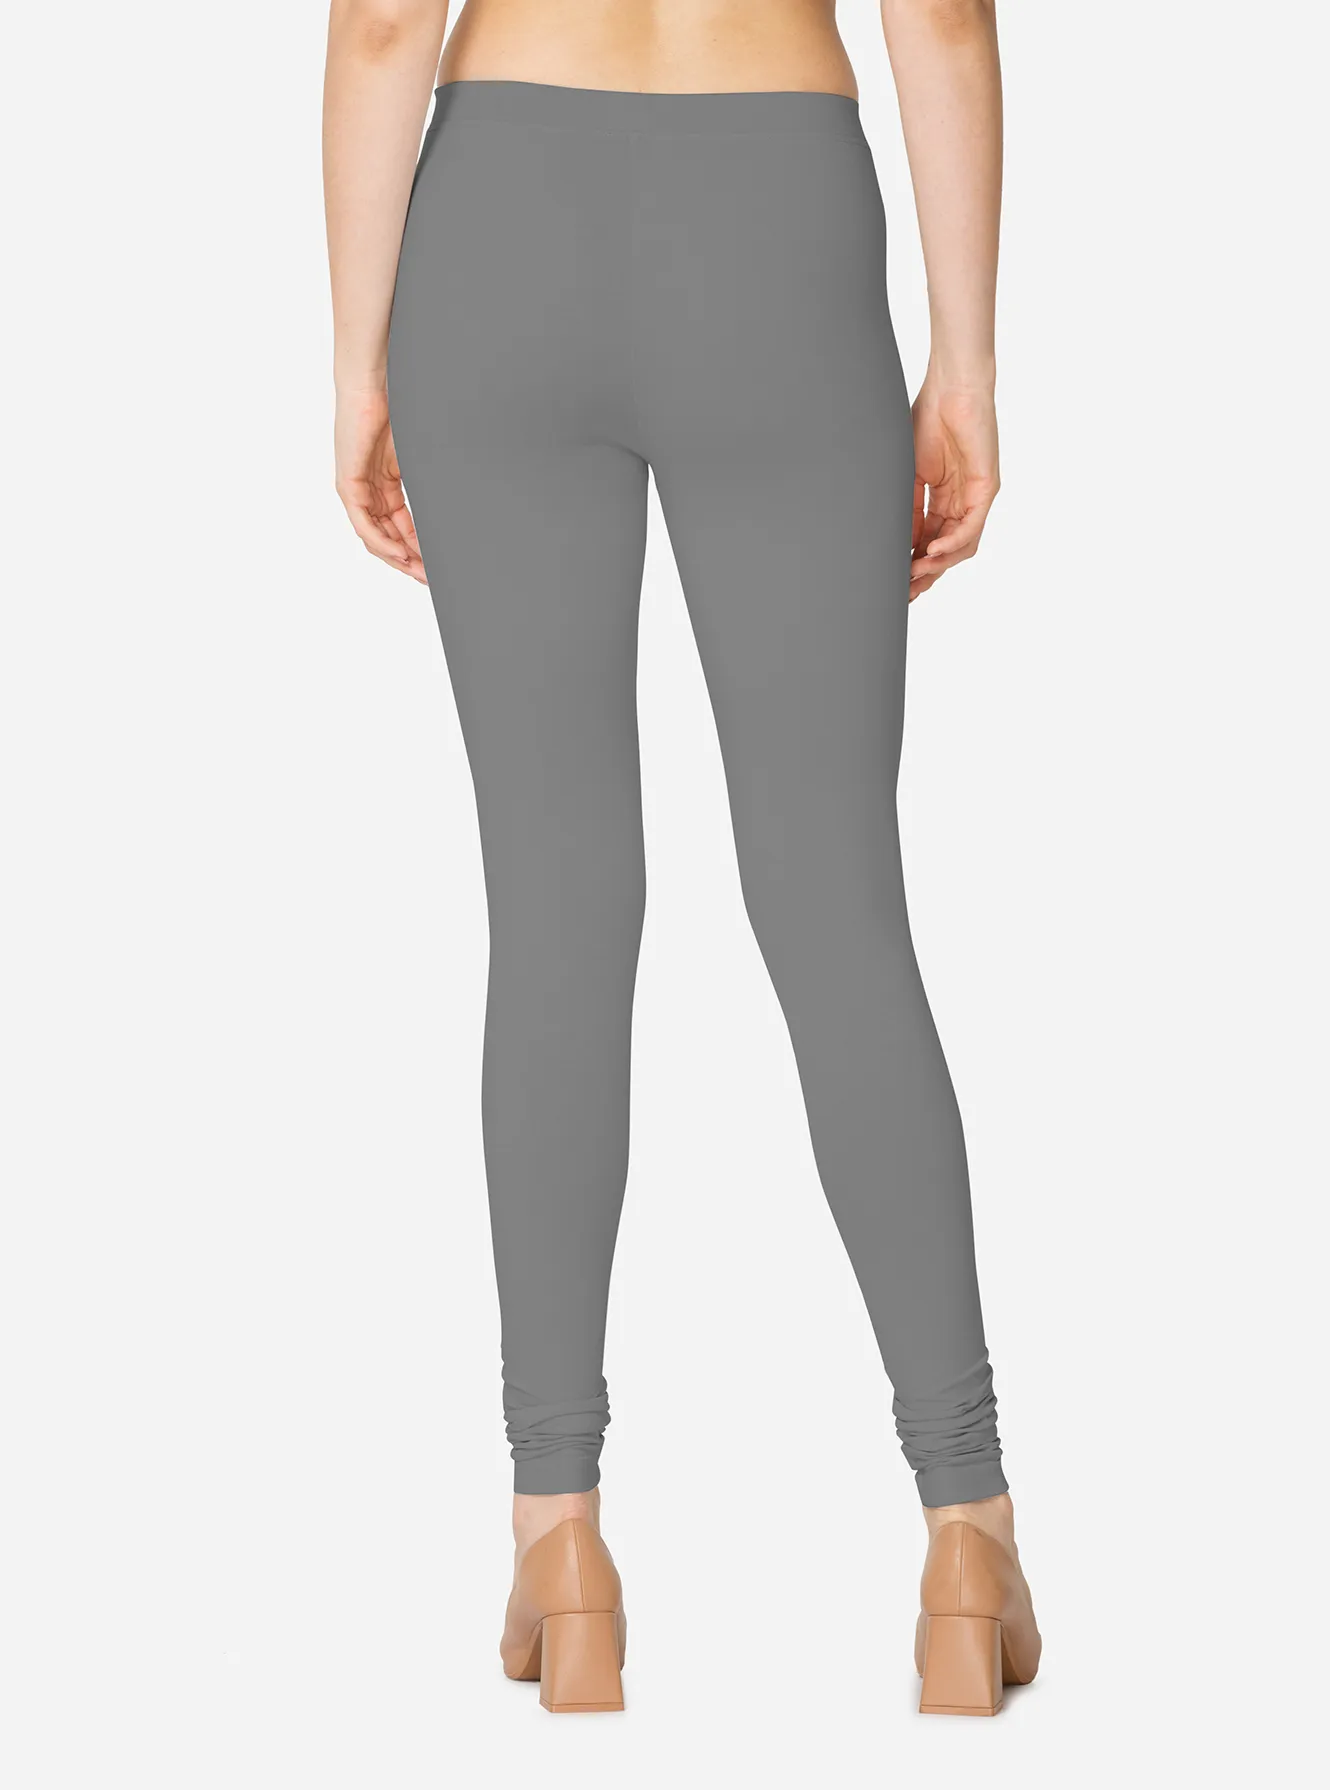 Buy Trendy Girls Combed Pure Cotton Leggings - Dark Grey Color (S, Dark Grey)  at Amazon.in